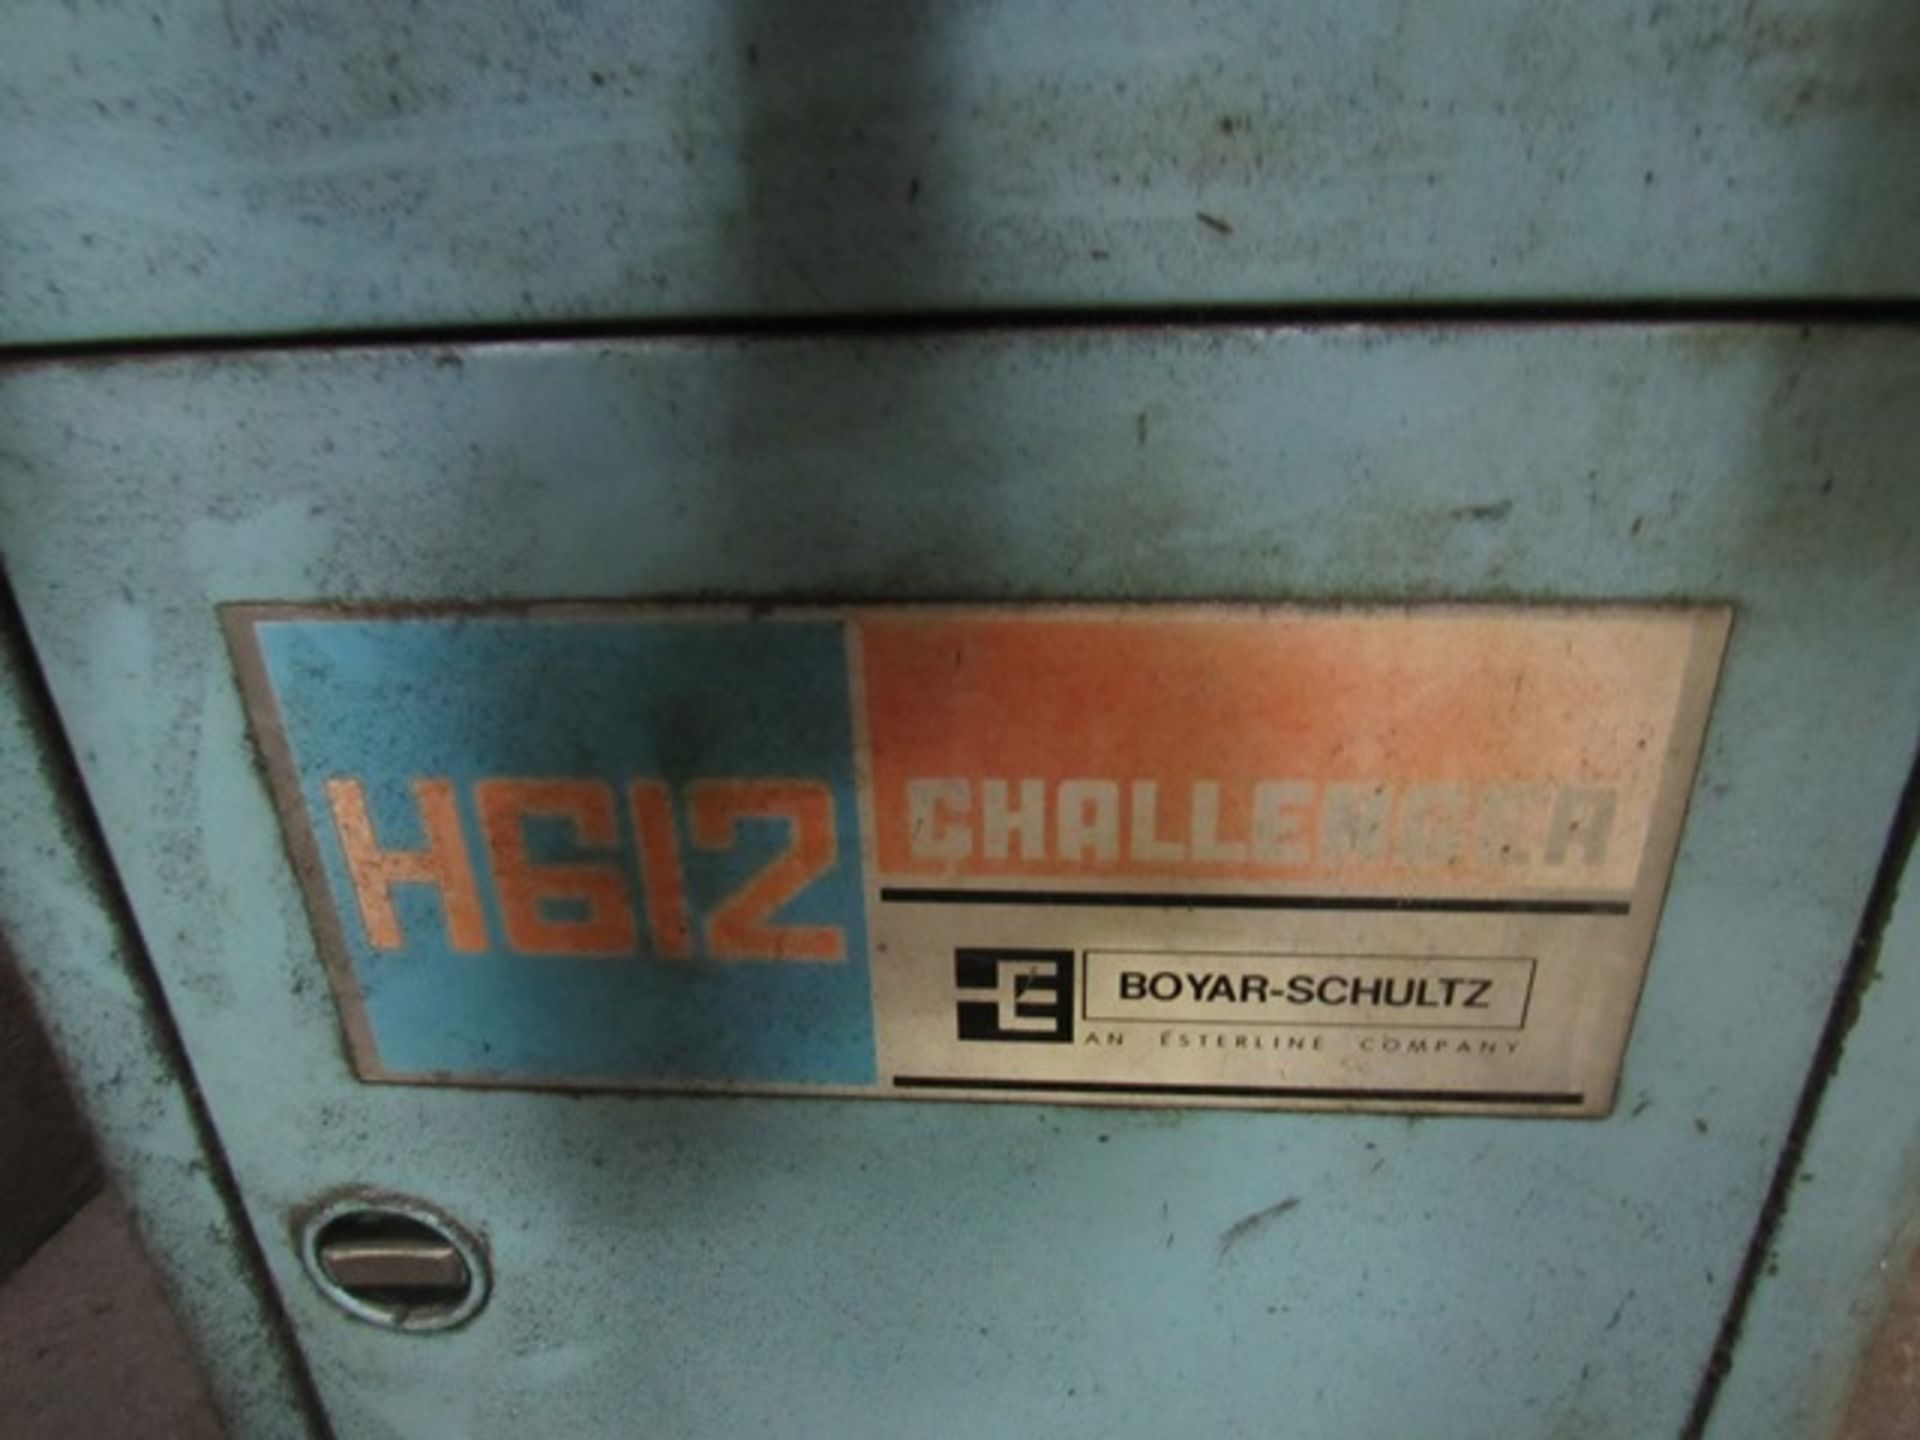 Boyar-Schultz H612 Handfeed Surface Grinder, Rigging Fee: $300 - Image 3 of 5